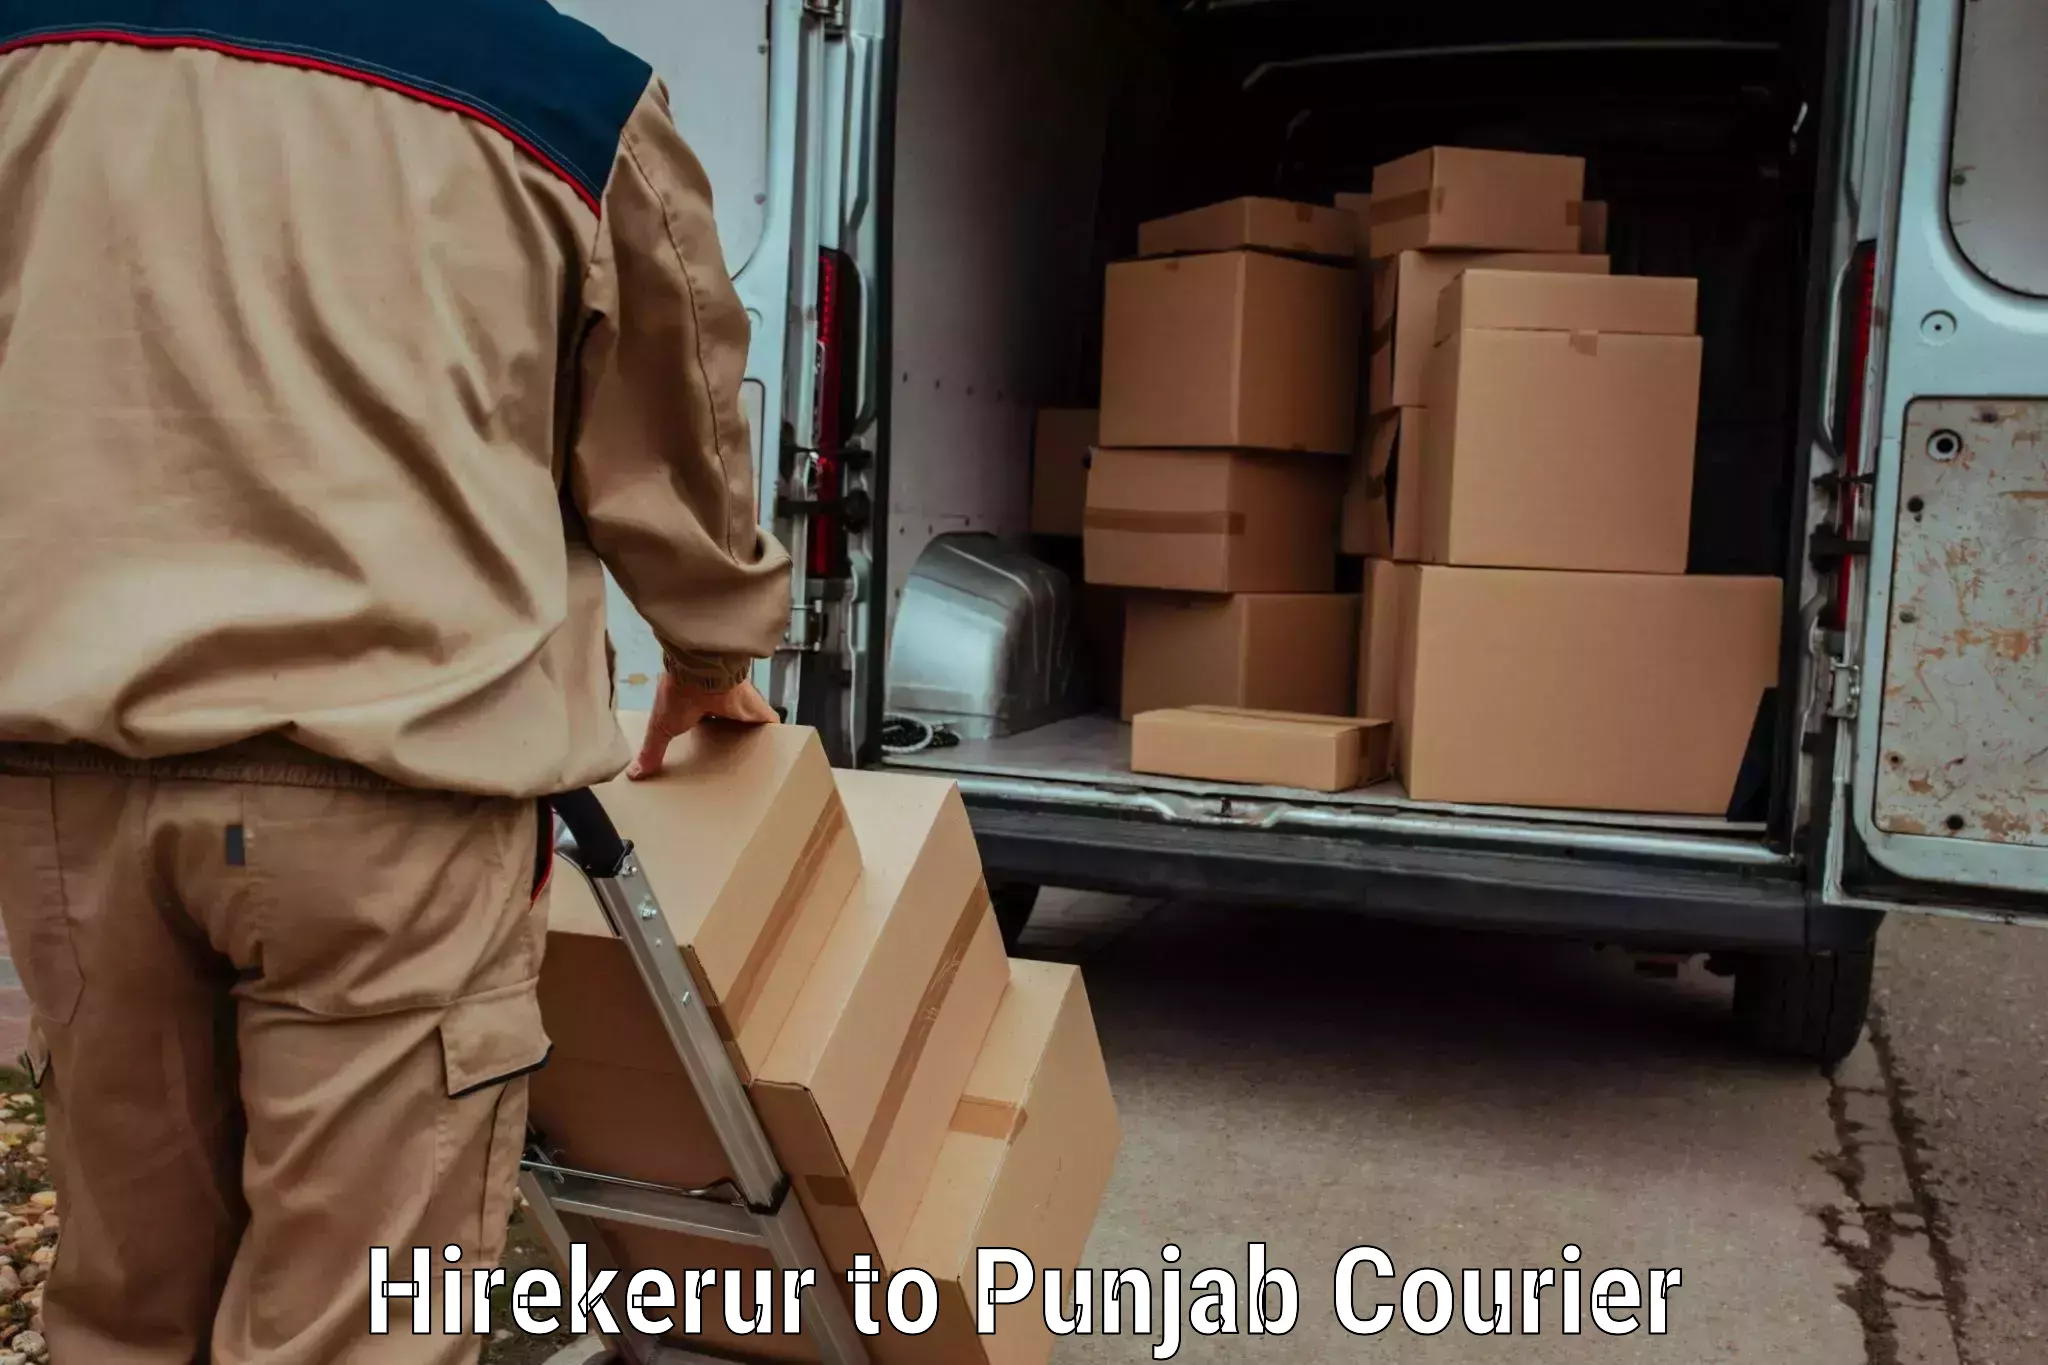 Quick dispatch service Hirekerur to Nawanshahr